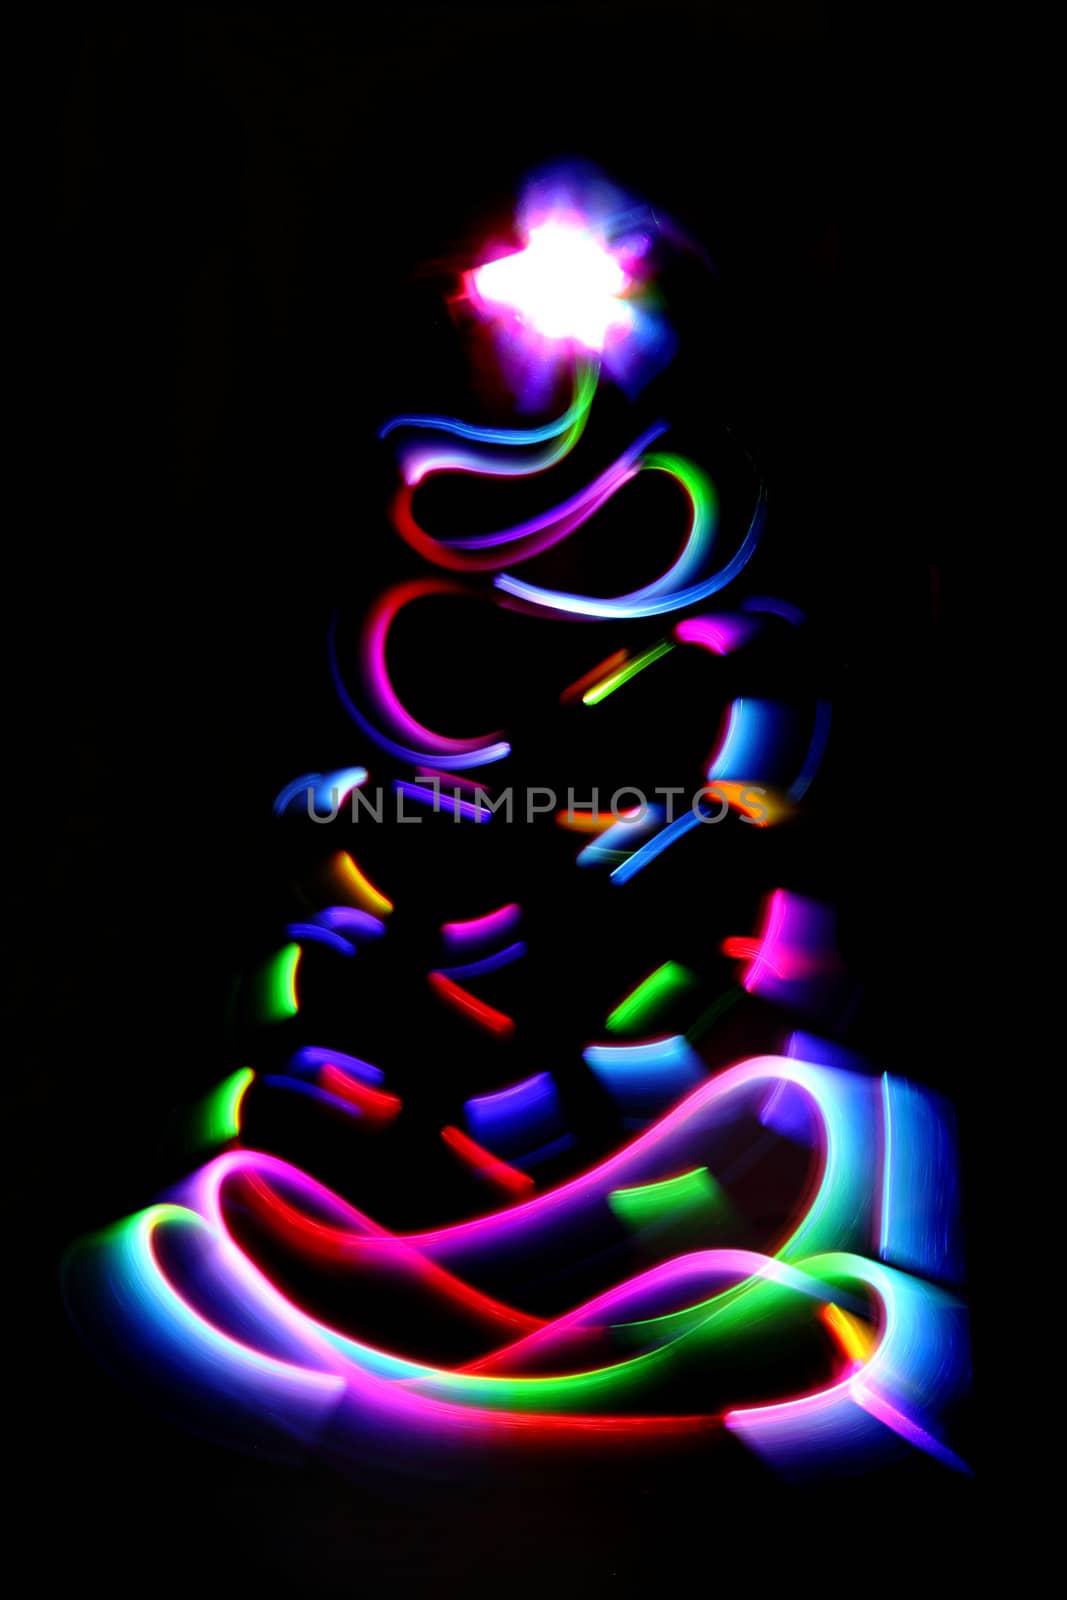 xmas tree from the christmas lights by jonnysek